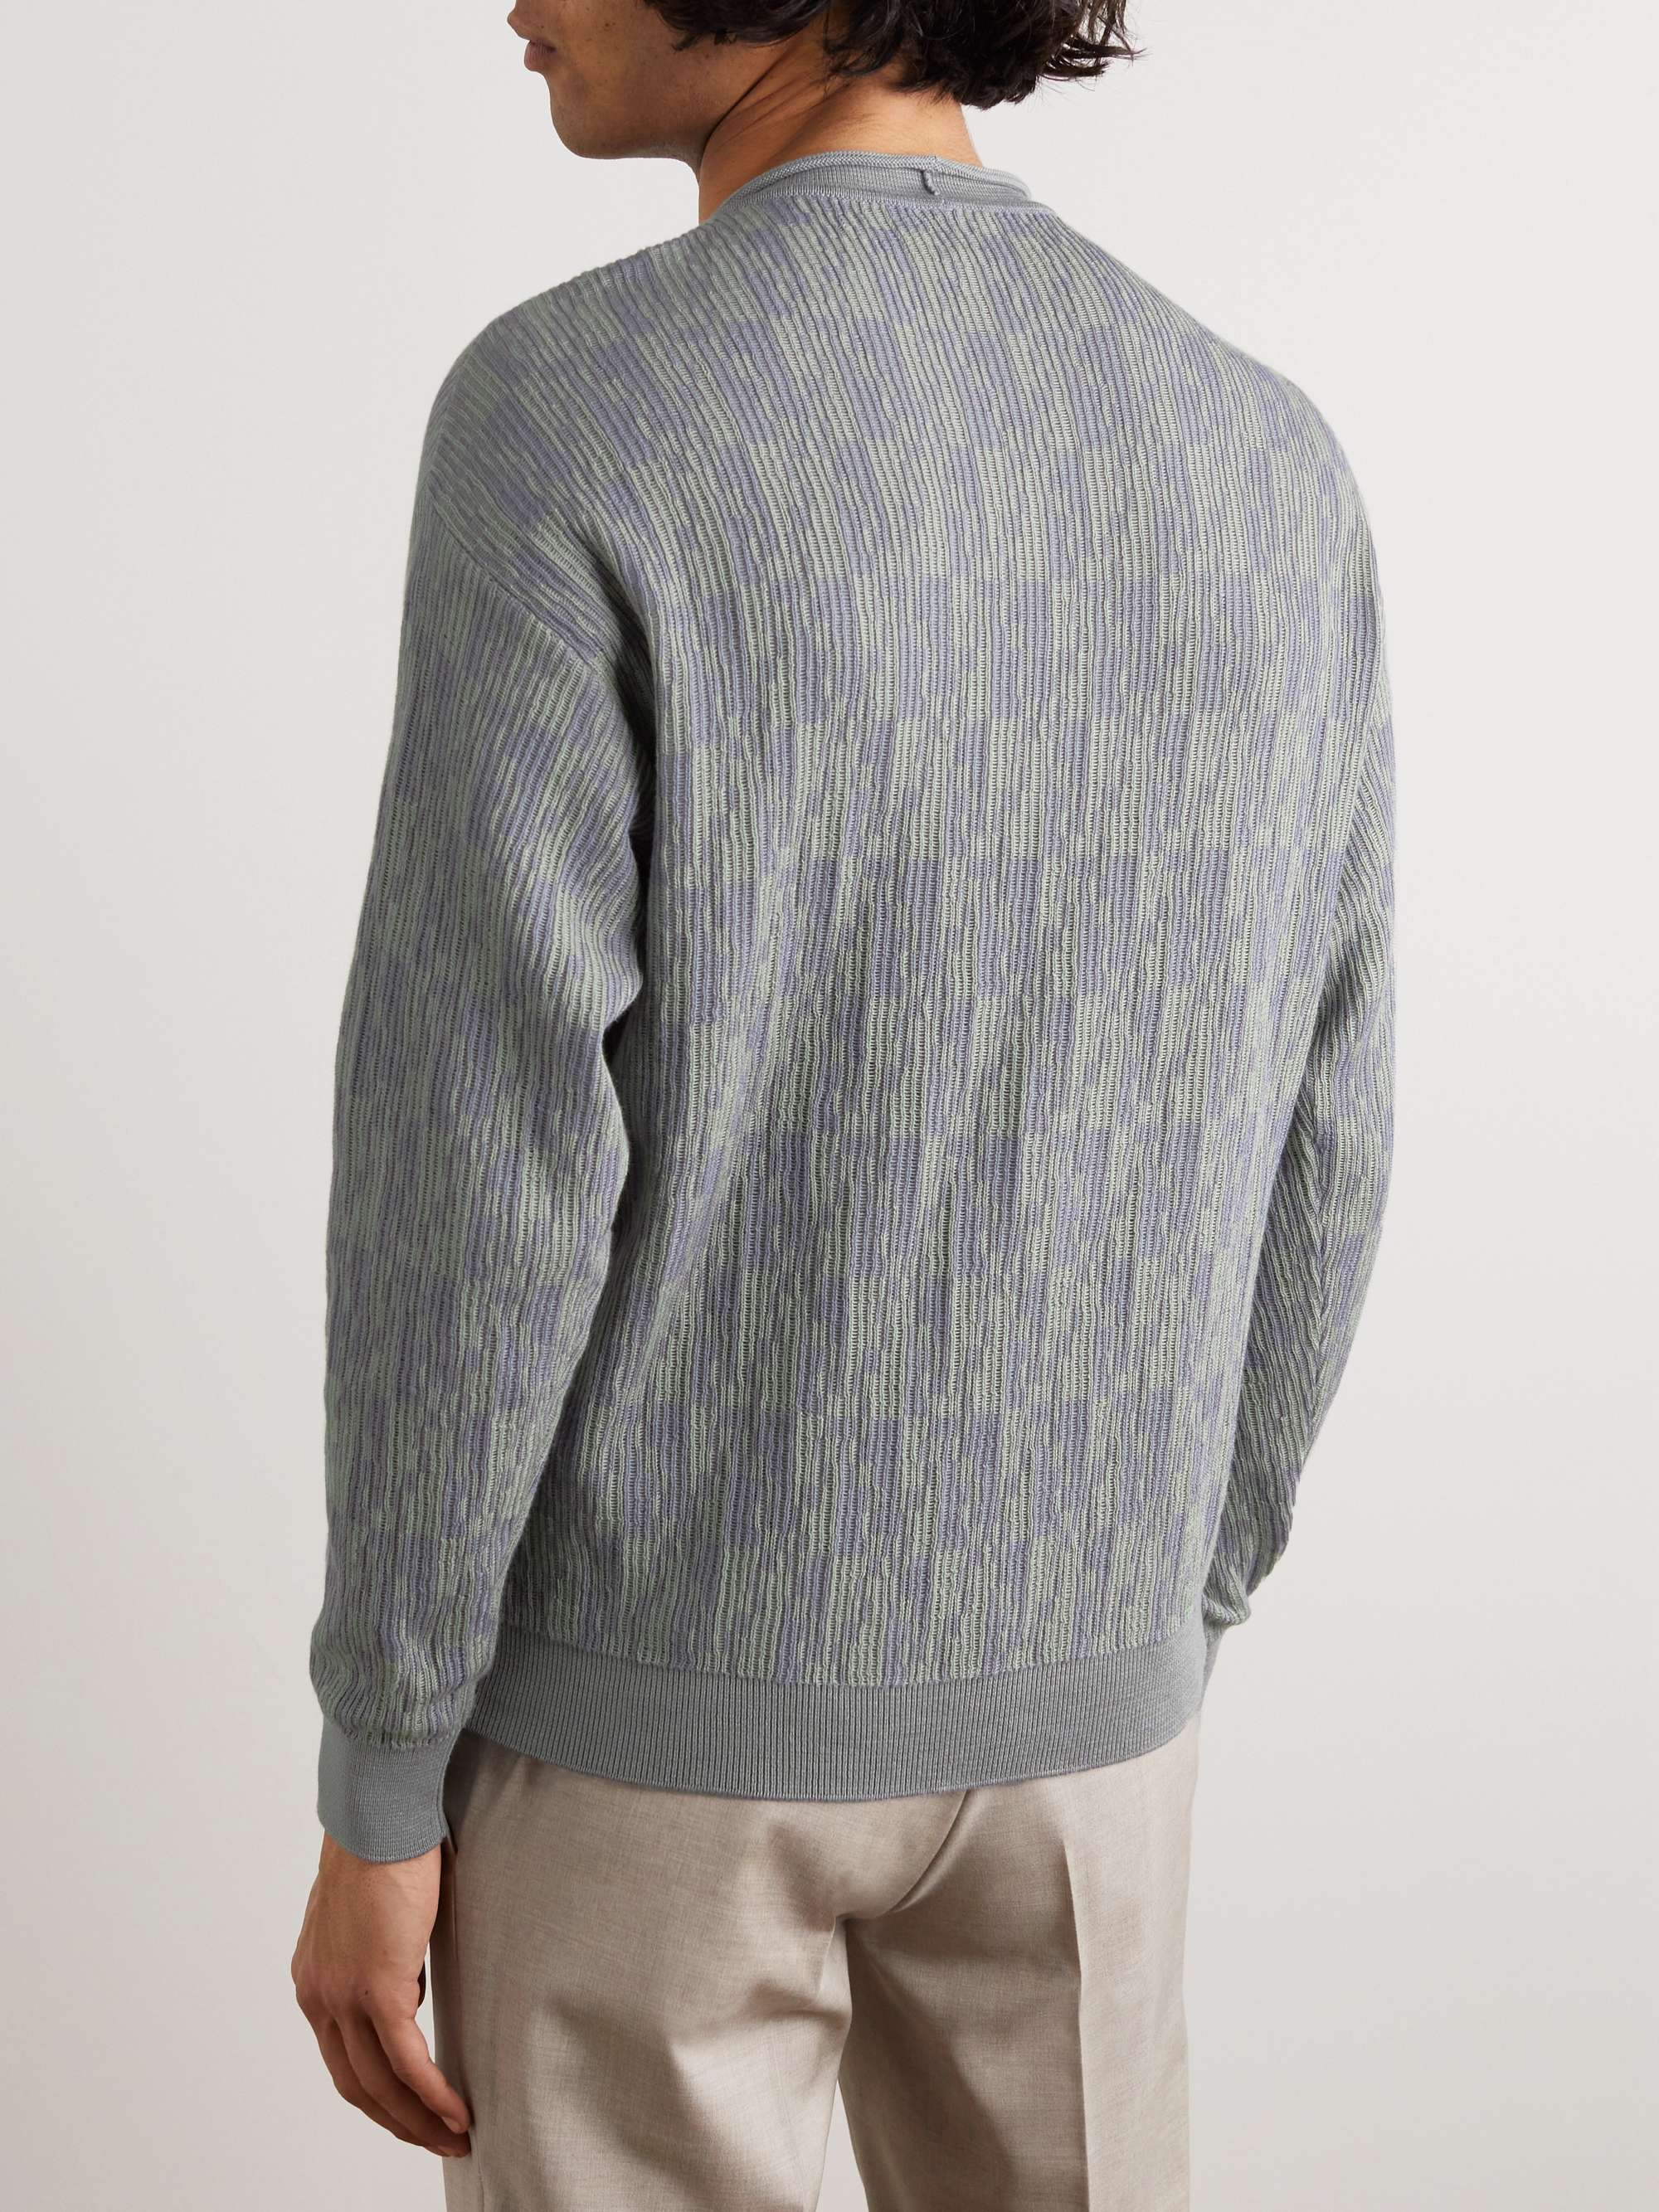 GIORGIO ARMANI Slim-Fit Jacquard-Knit Cotton and Cashmere-Blend Sweater